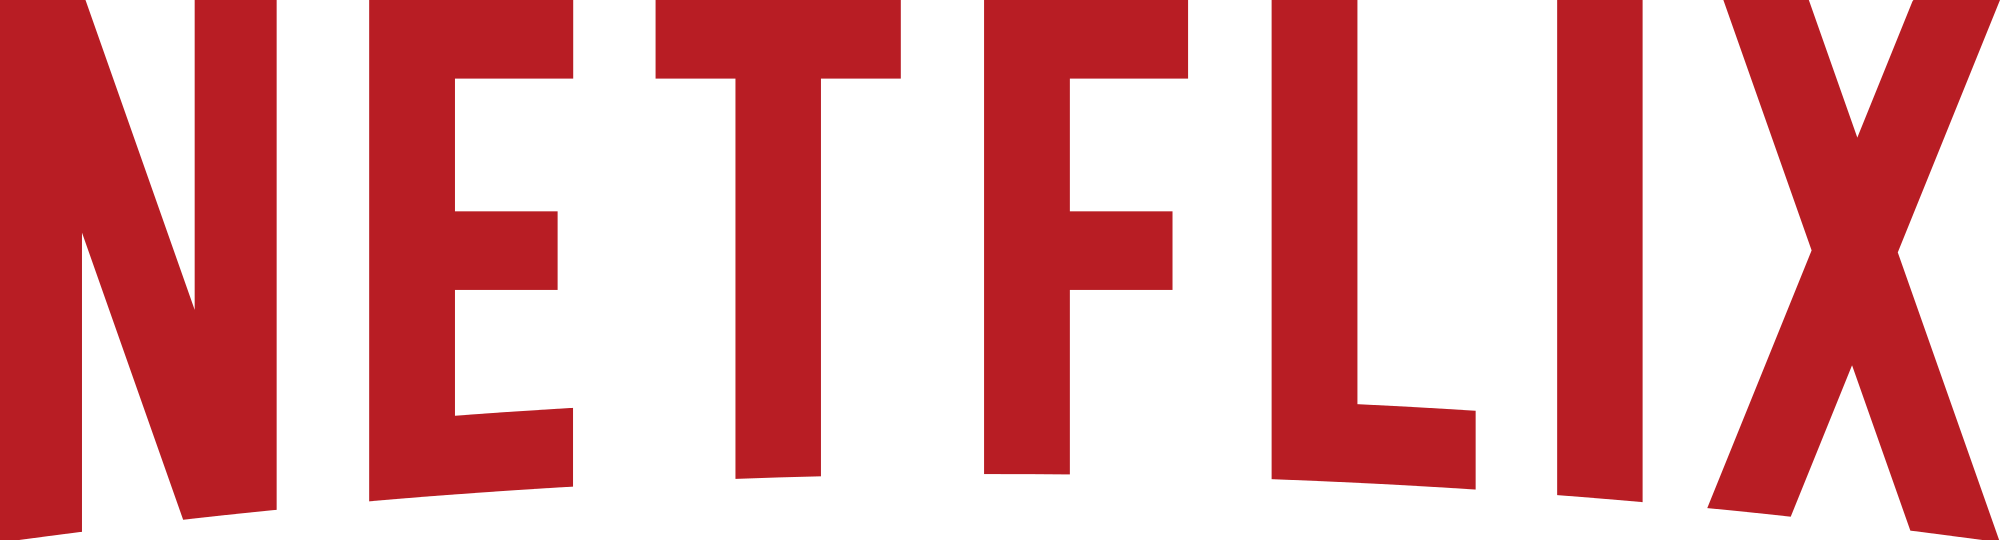 22, February 21, 2015 - Netflix High Res Logo (2000x540)